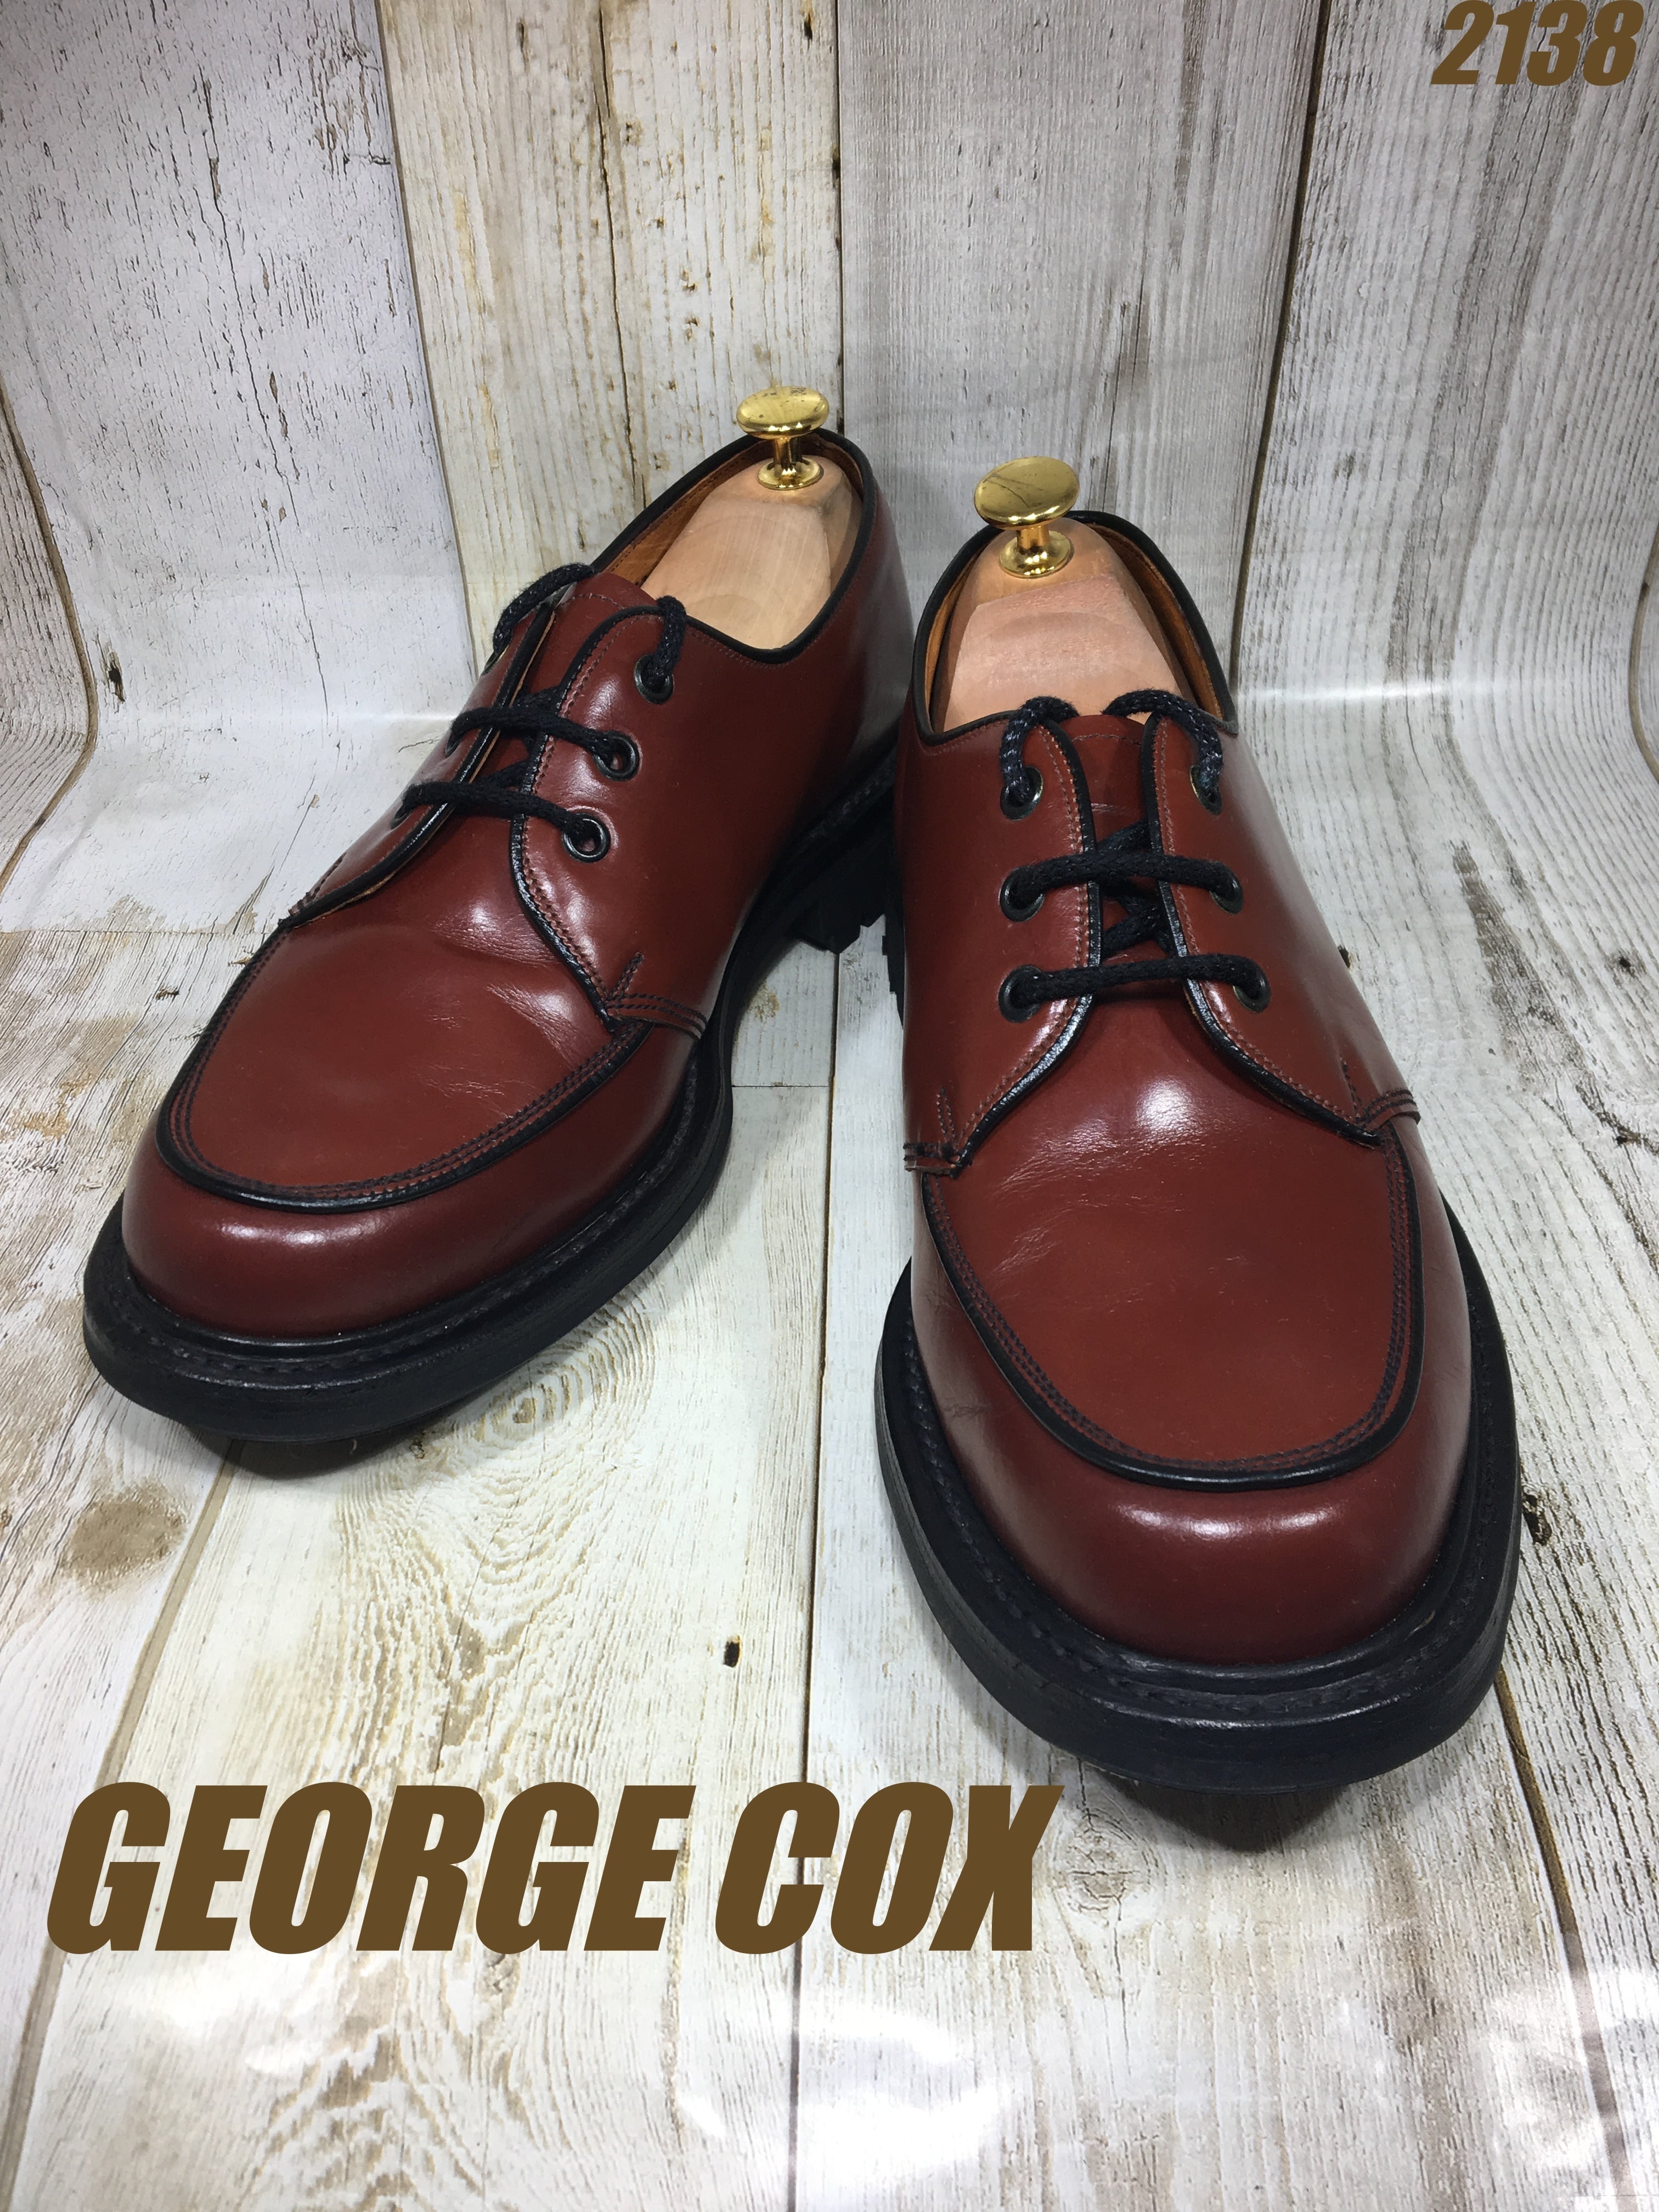 GEORGE COX ジョージコックス Uチップ UK8 26.5cm | 中古靴・革靴